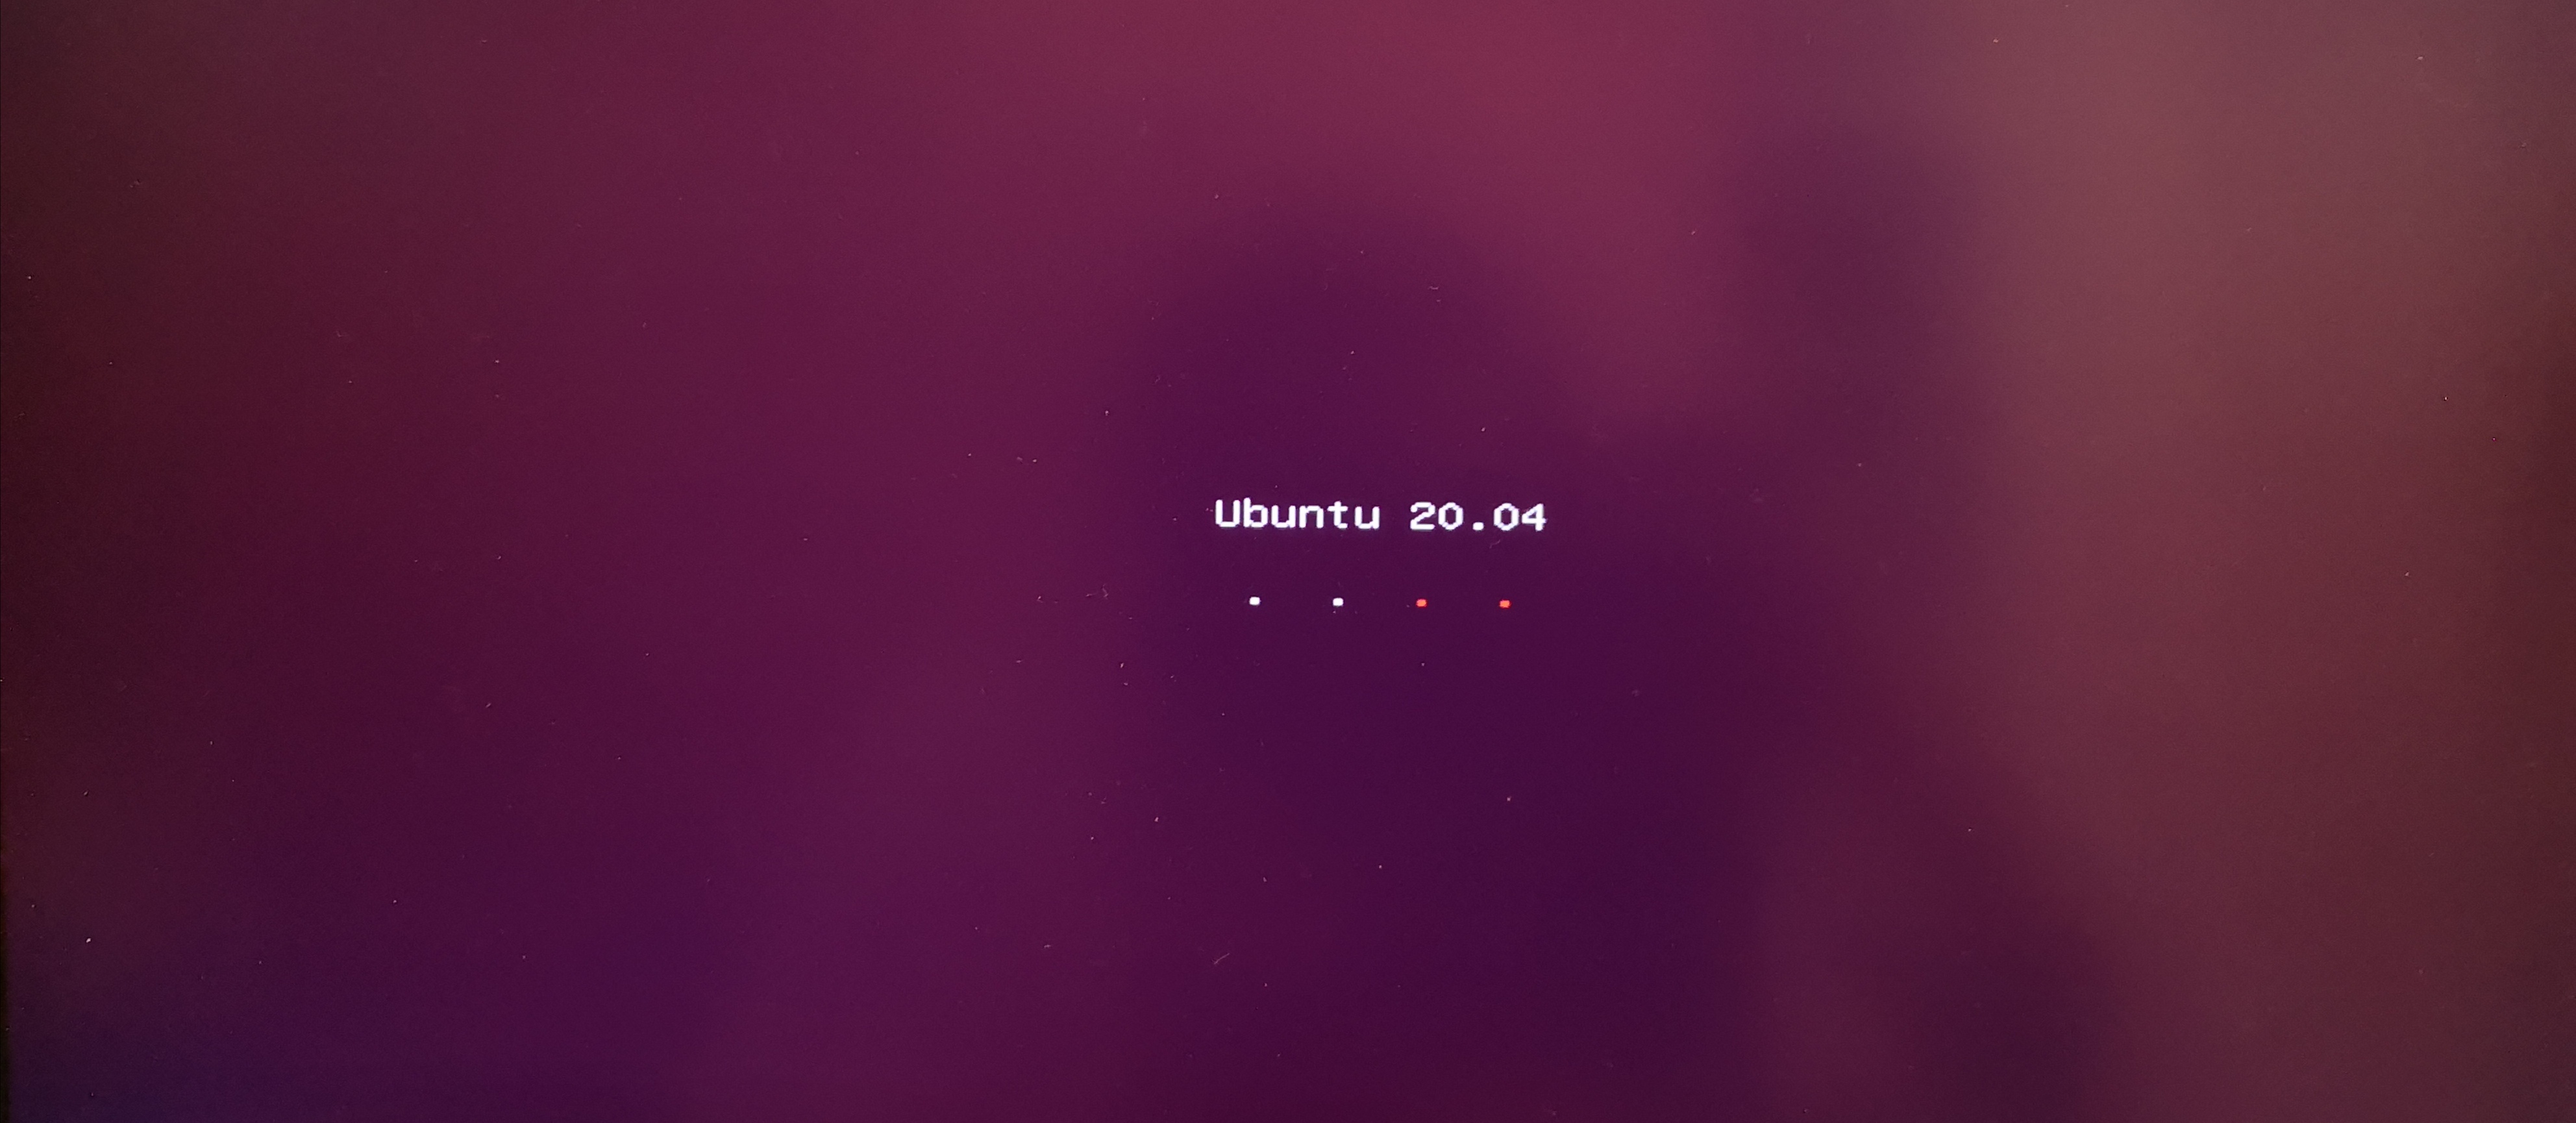 Nom : ubuntu20.04 ecran bug.jpg
Affichages : 84
Taille : 1,19 Mo